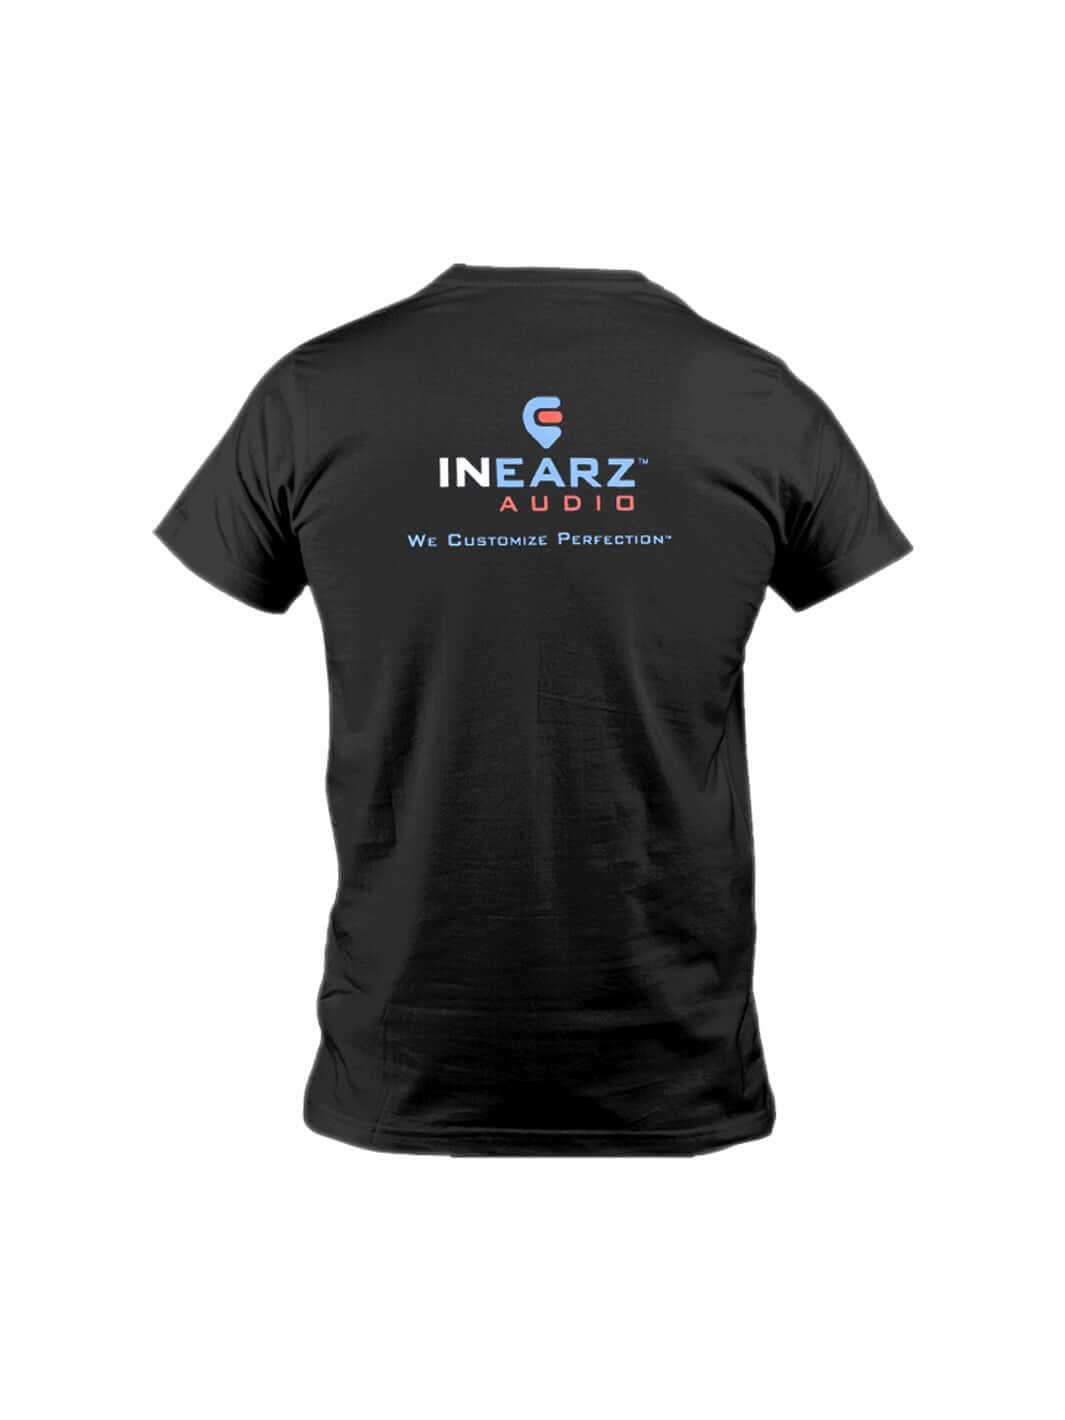 InEarz Avatar T-shirt 2 | InEarz Audio